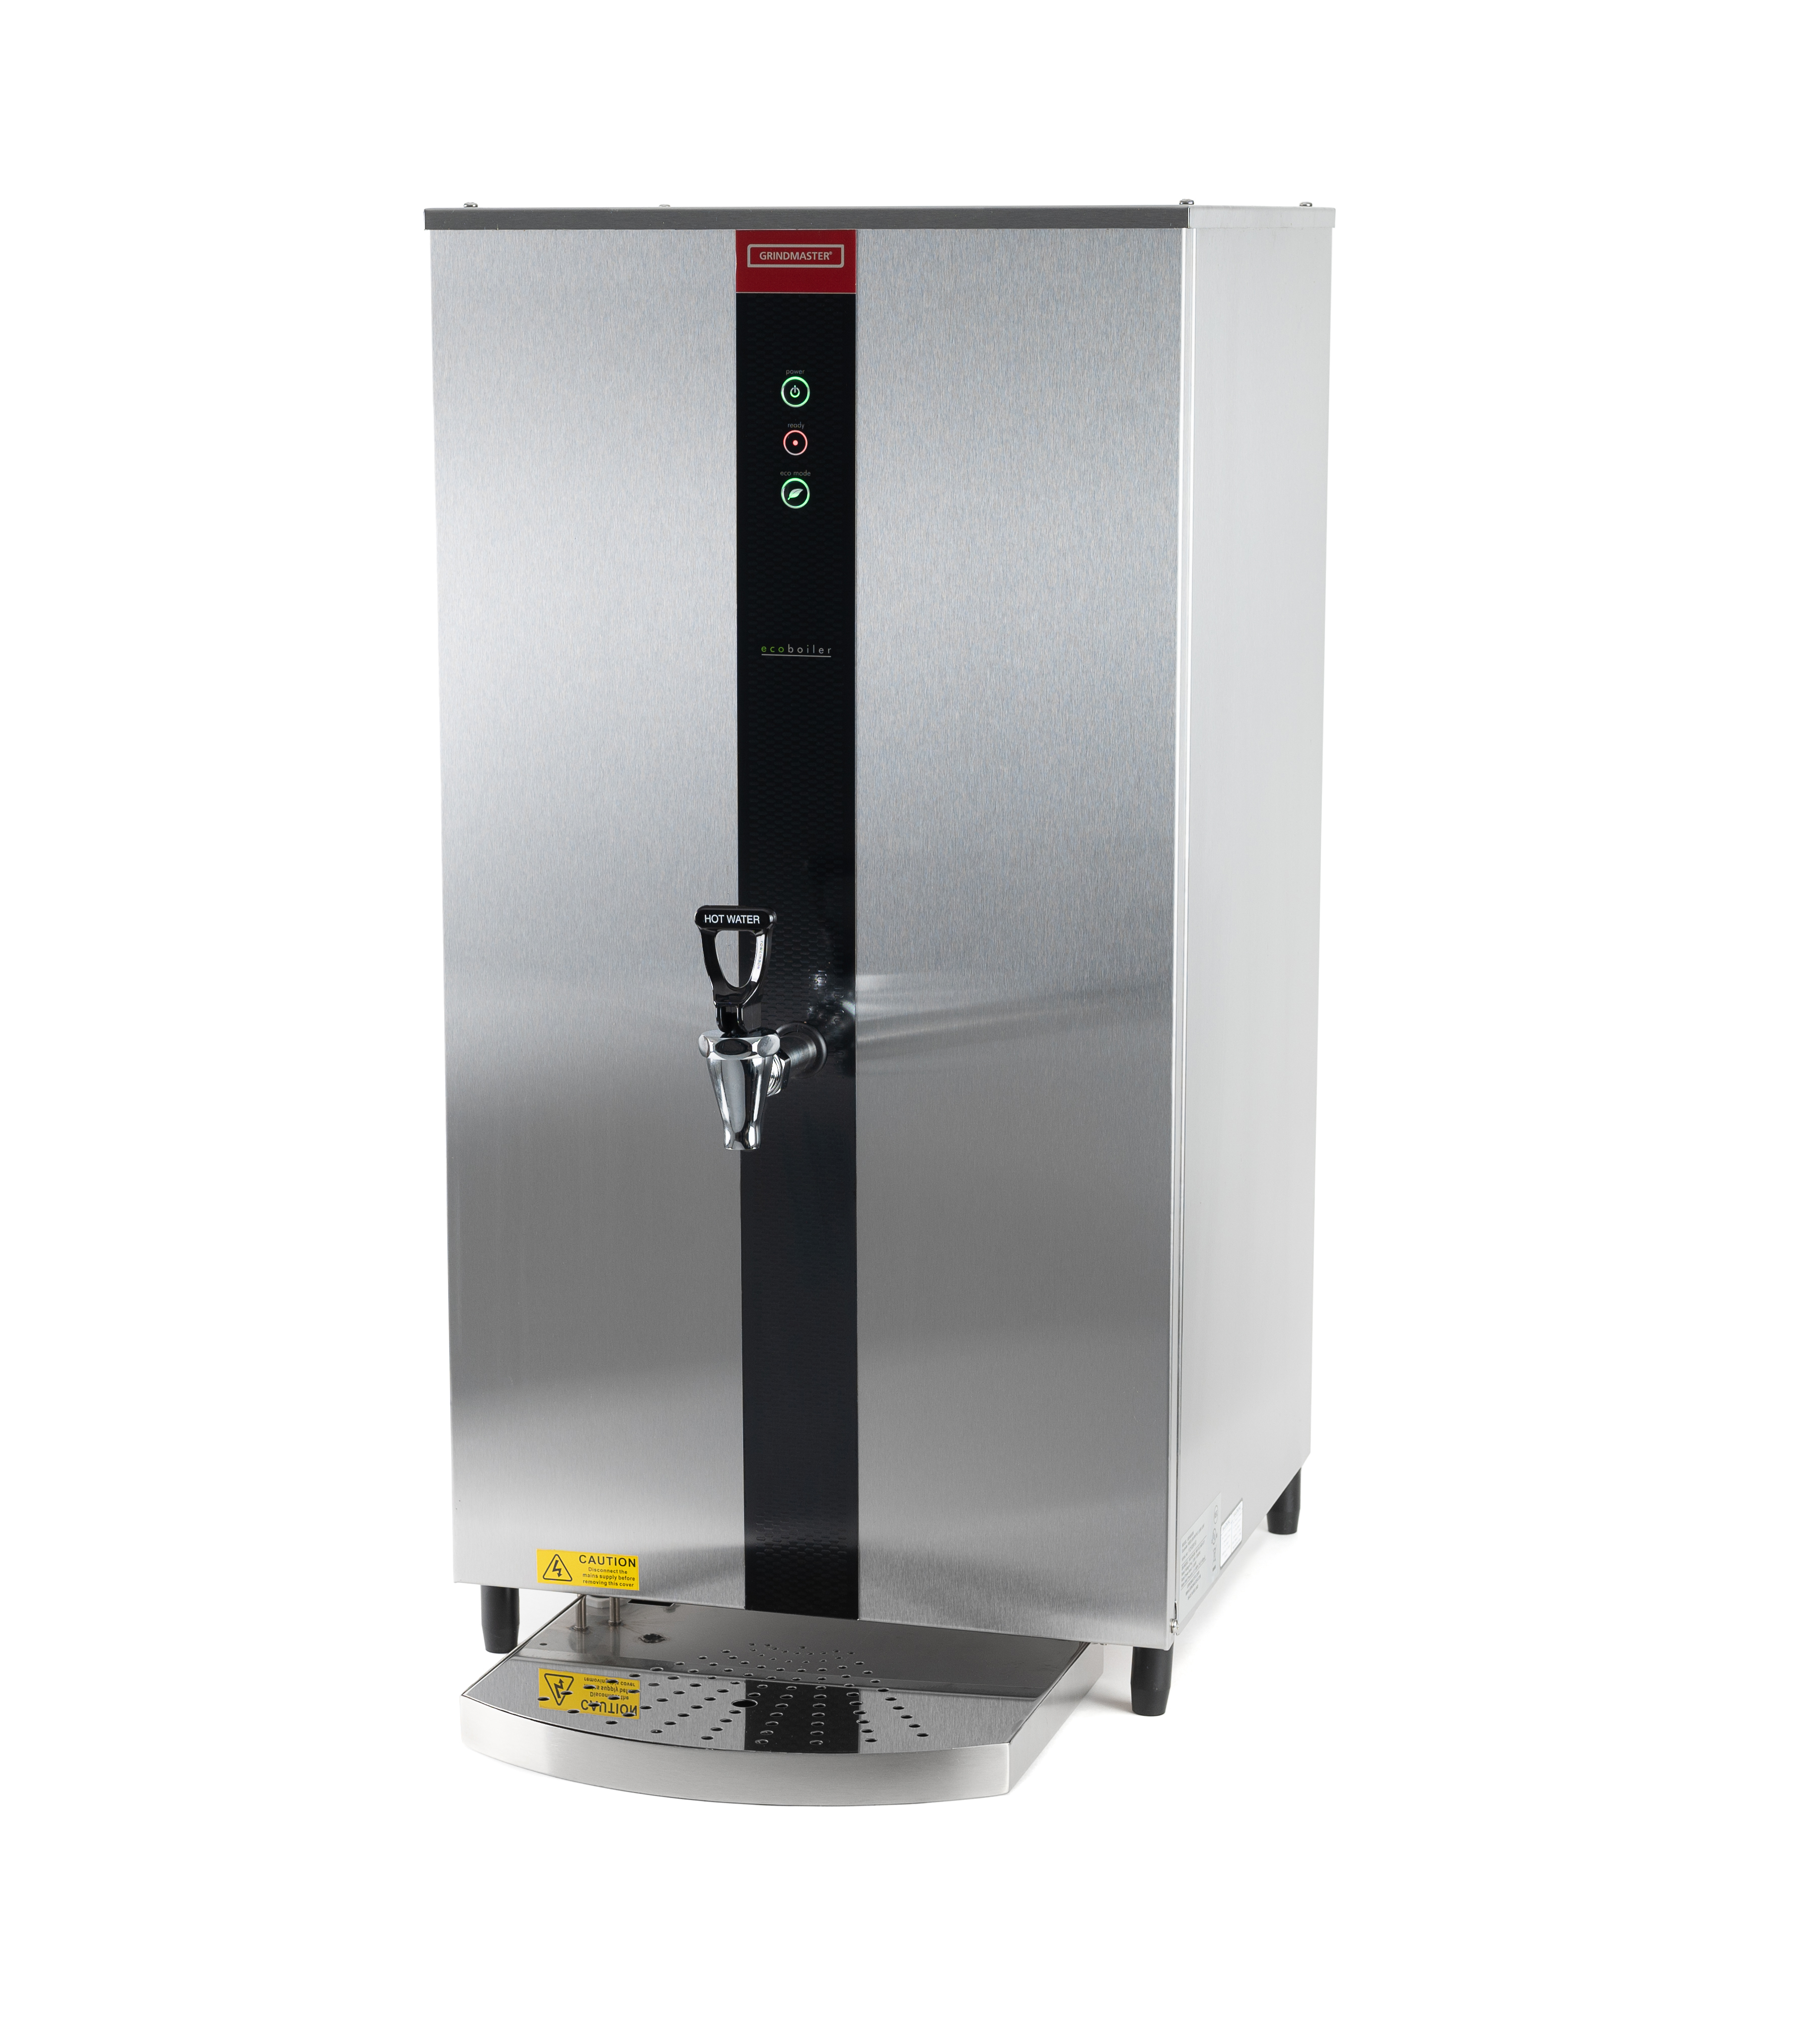 Grindmaster-UNIC-Crathco LOLA Electric (Hot) Beverage Dispenser